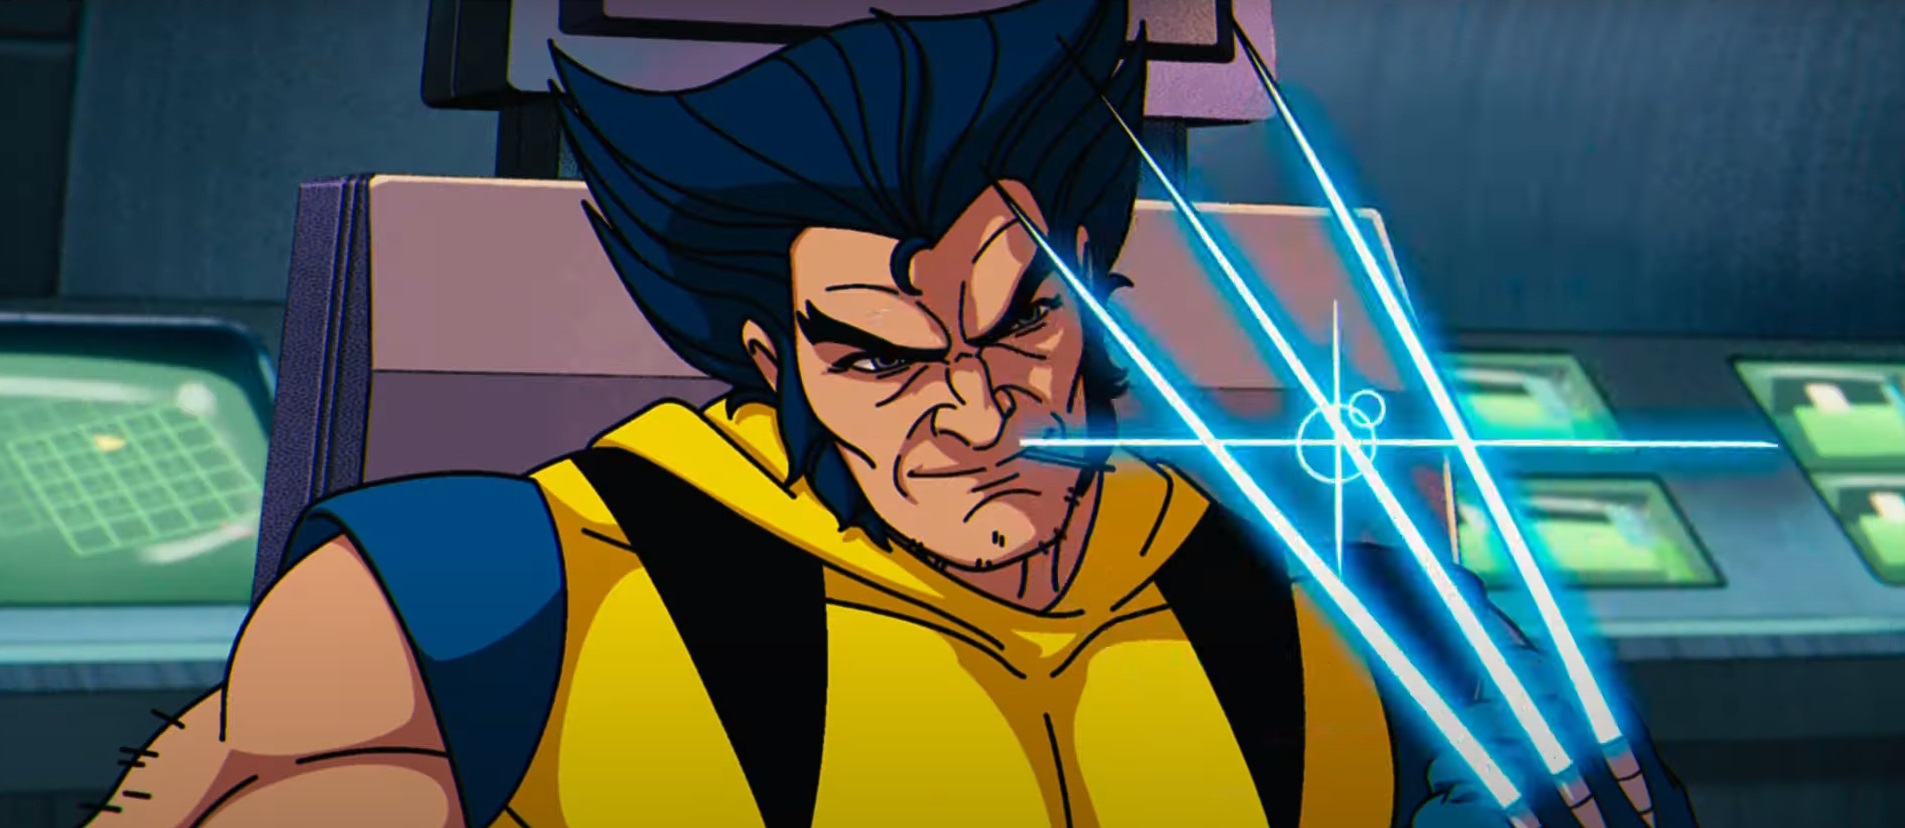 X-Men ’97 Trailer Recaps Key Episodes From Original Series